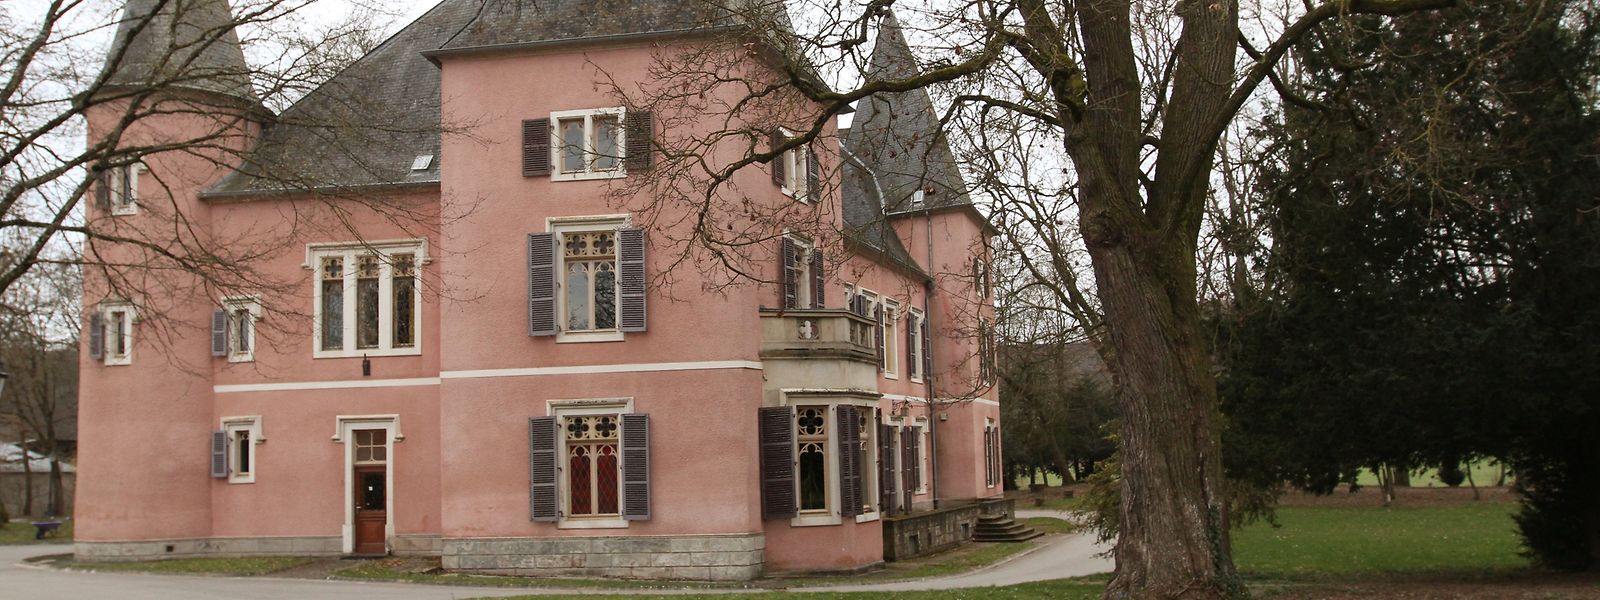 Das Erpeldinger Schloss, das seit 1987 als Gemeindehaus fungiert, soll national geschützt werden. 